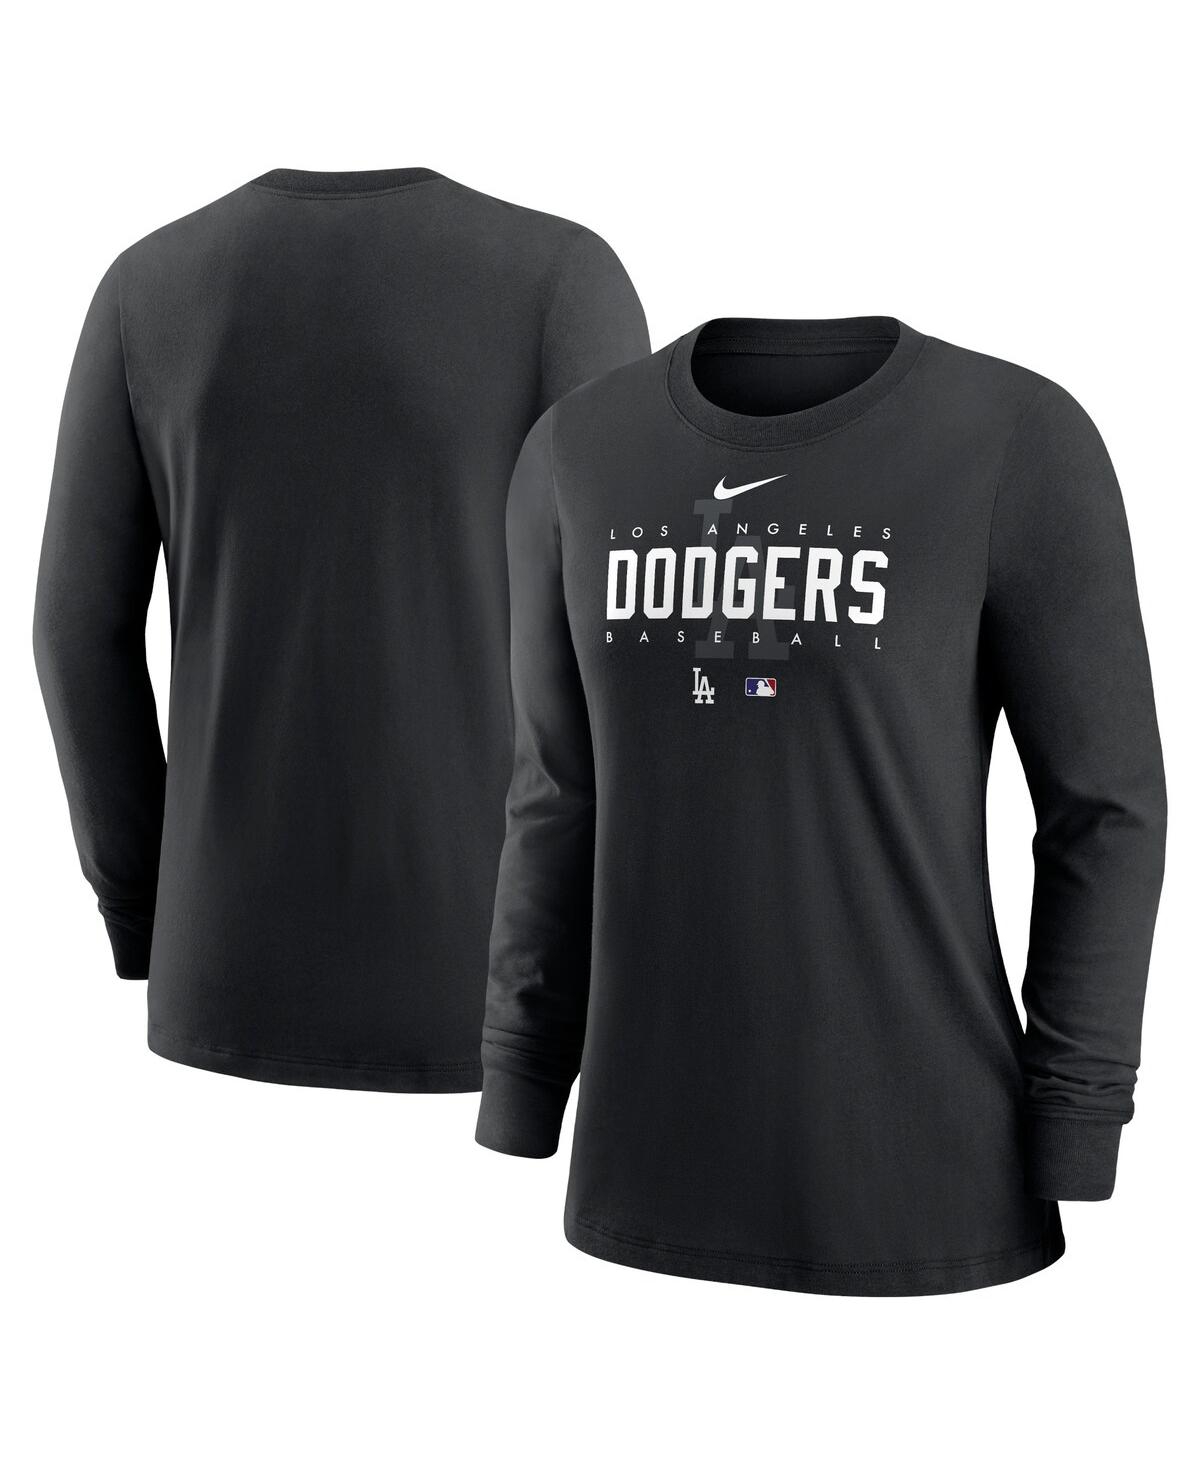 Women's Nike Black Los Angeles Dodgers Authentic Collection Legend Performance Long Sleeve T-shirt - Black